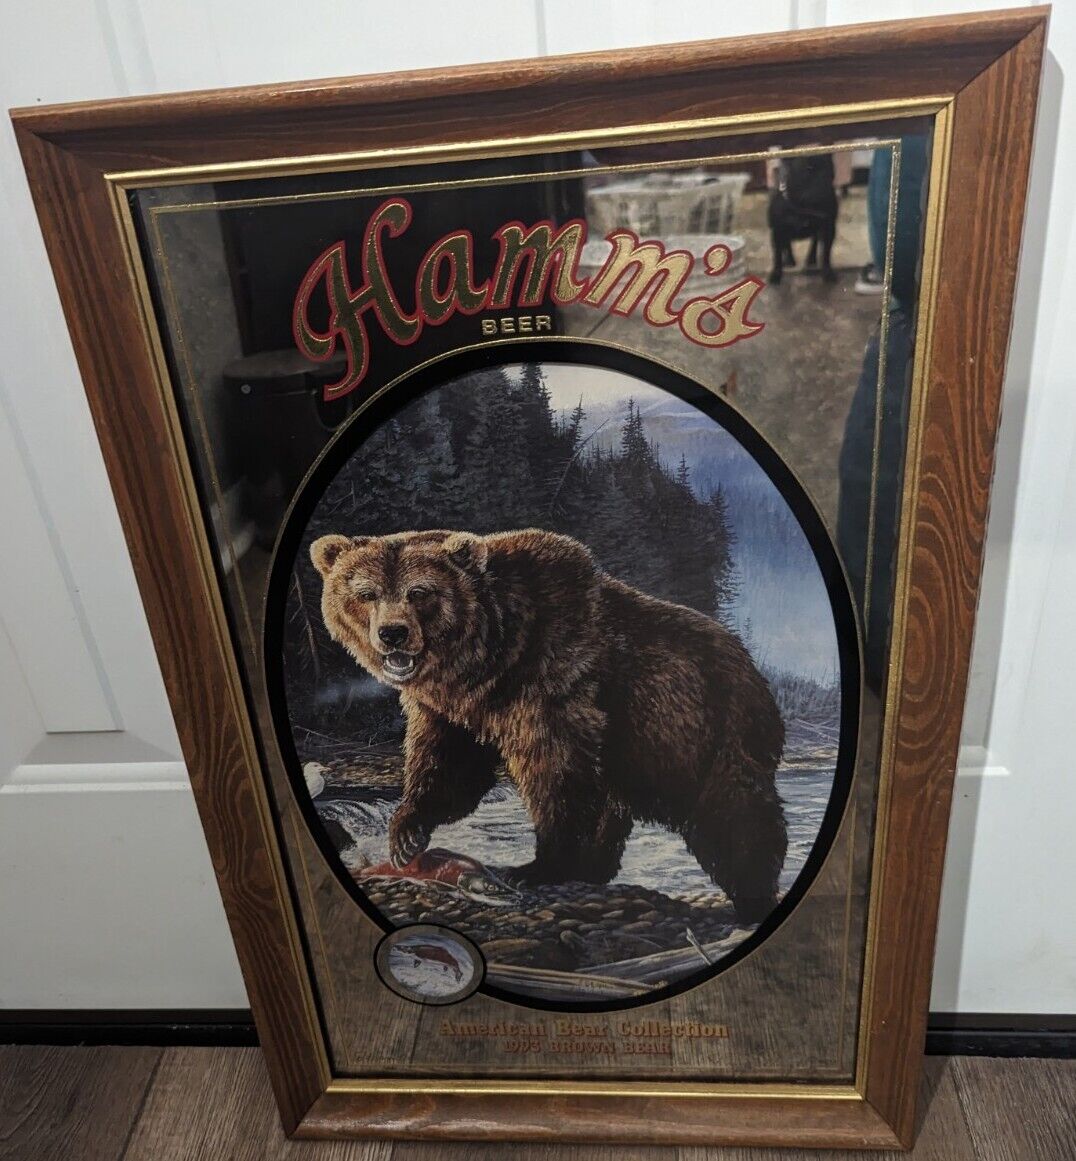 Hamms 1993 Brown bear Beer Mirror American collection Series Man cave Bar